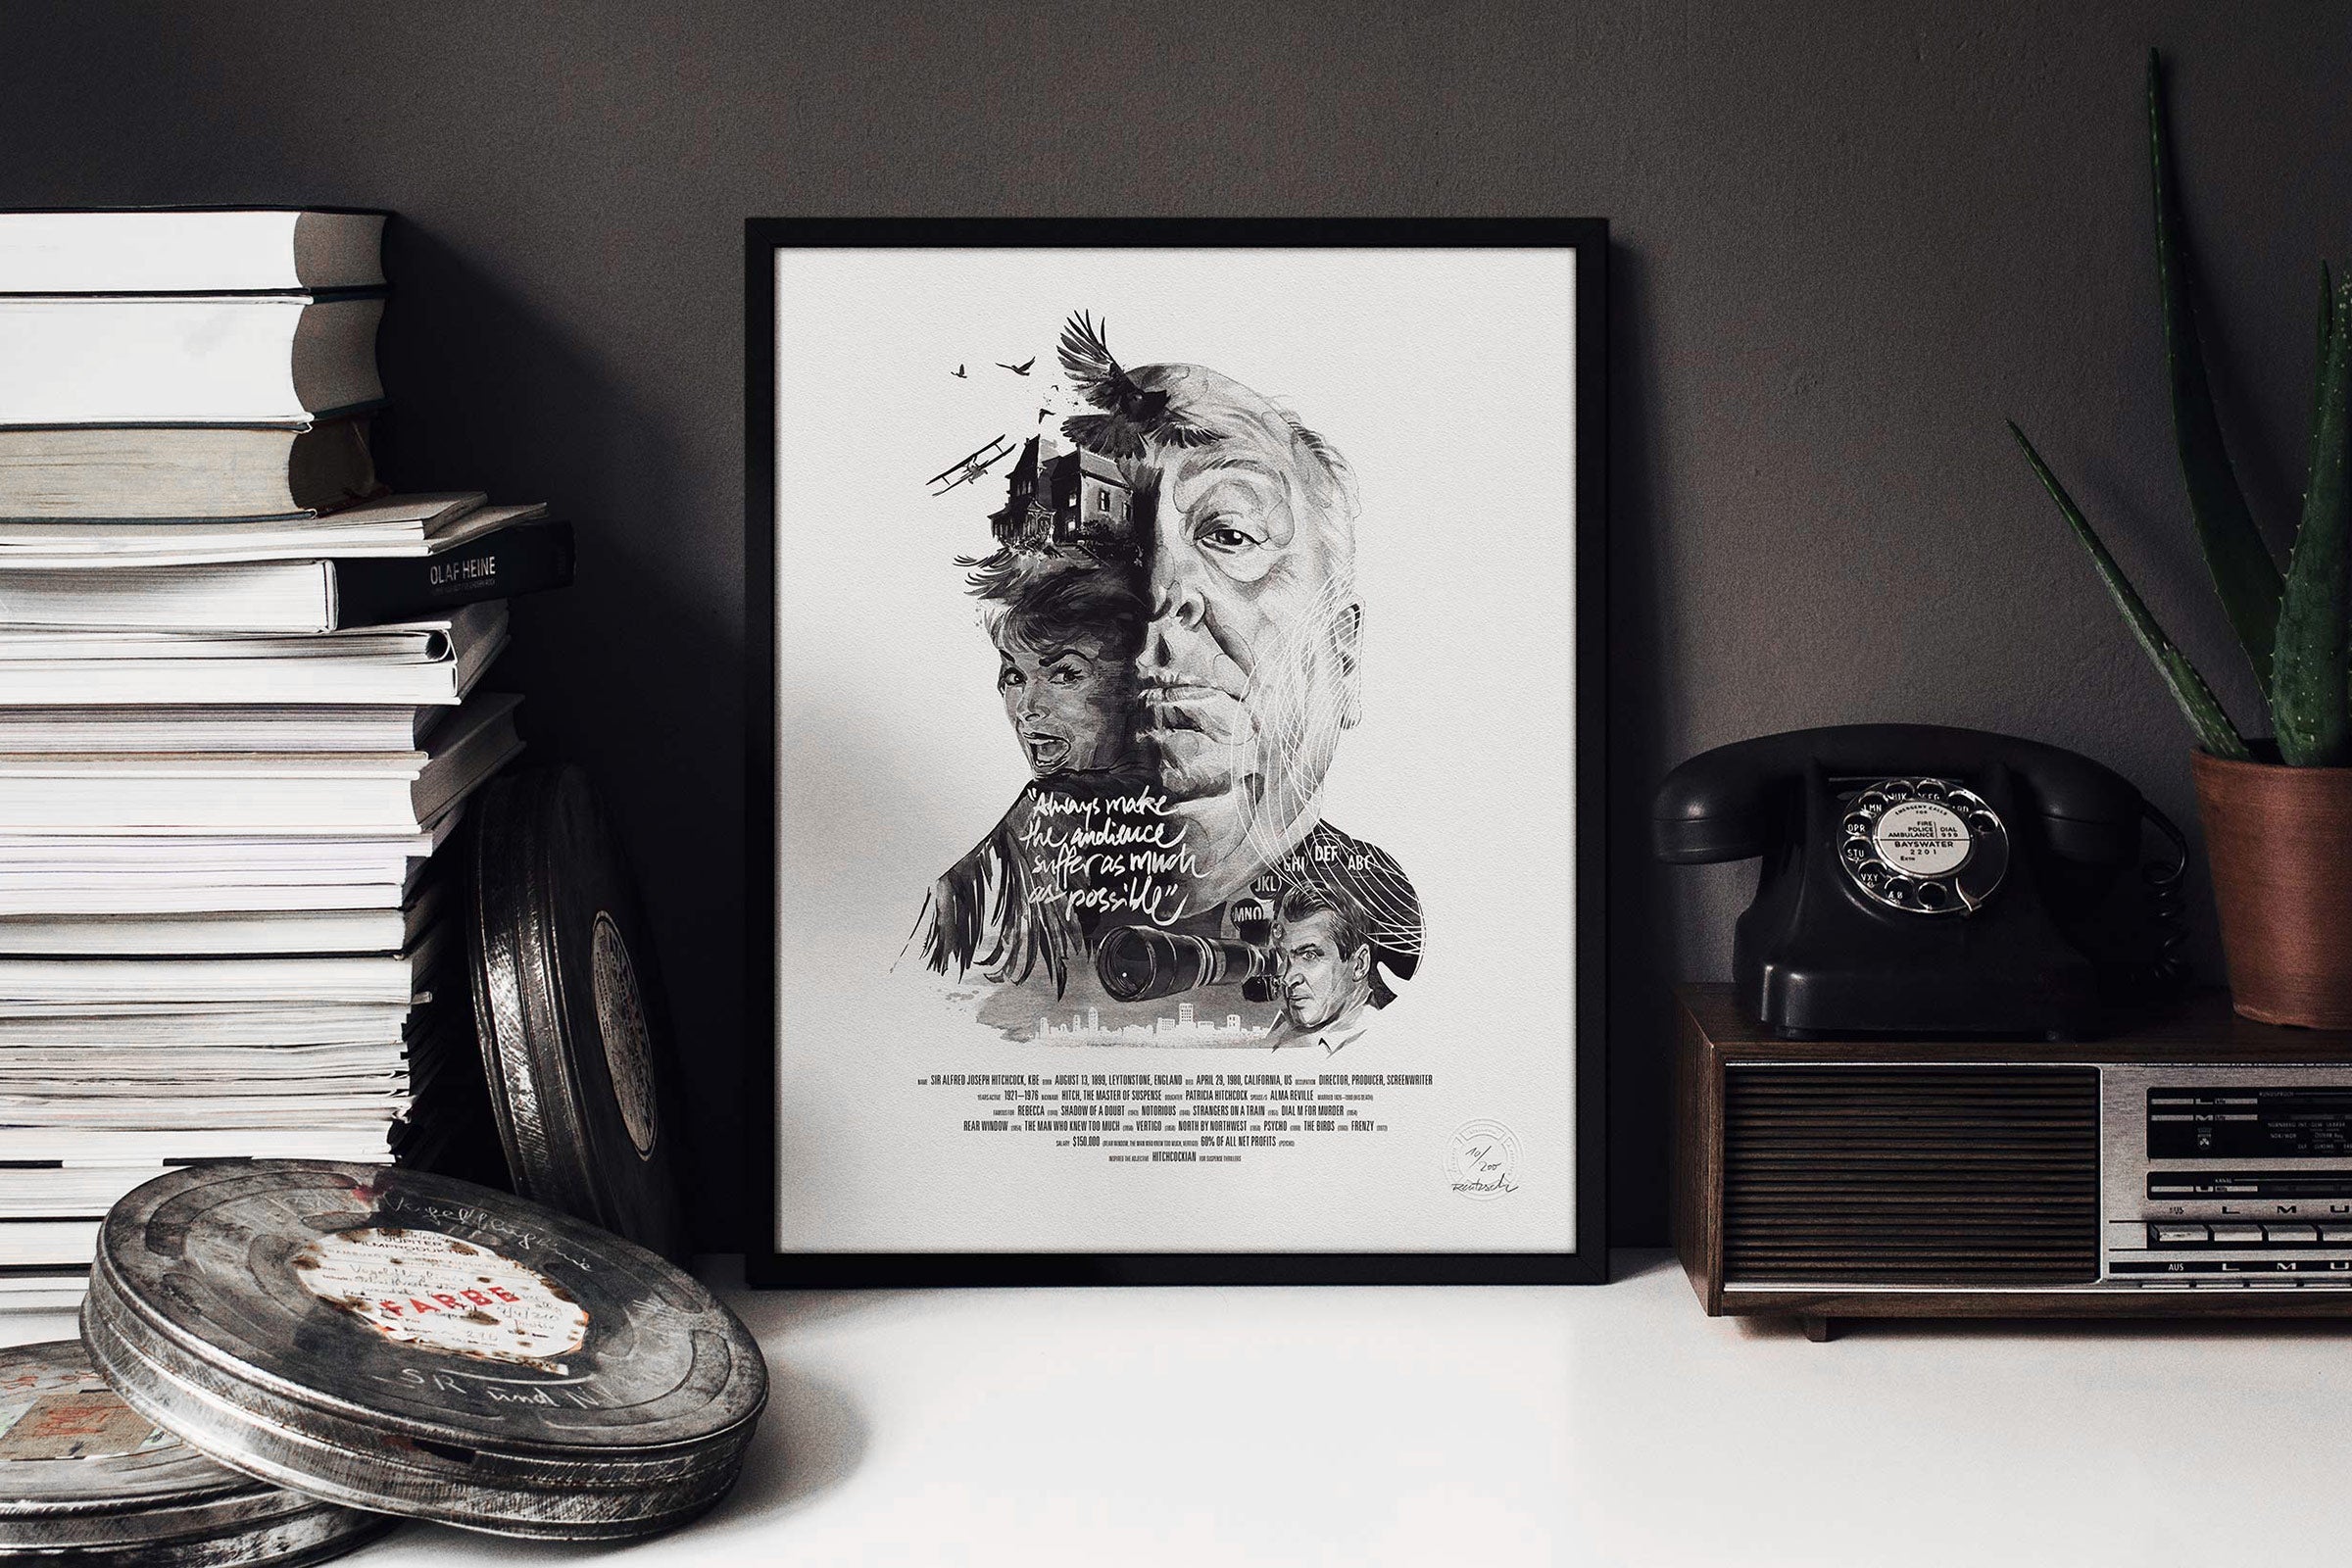 Movie Director Portrait – Alfred Hitchcock